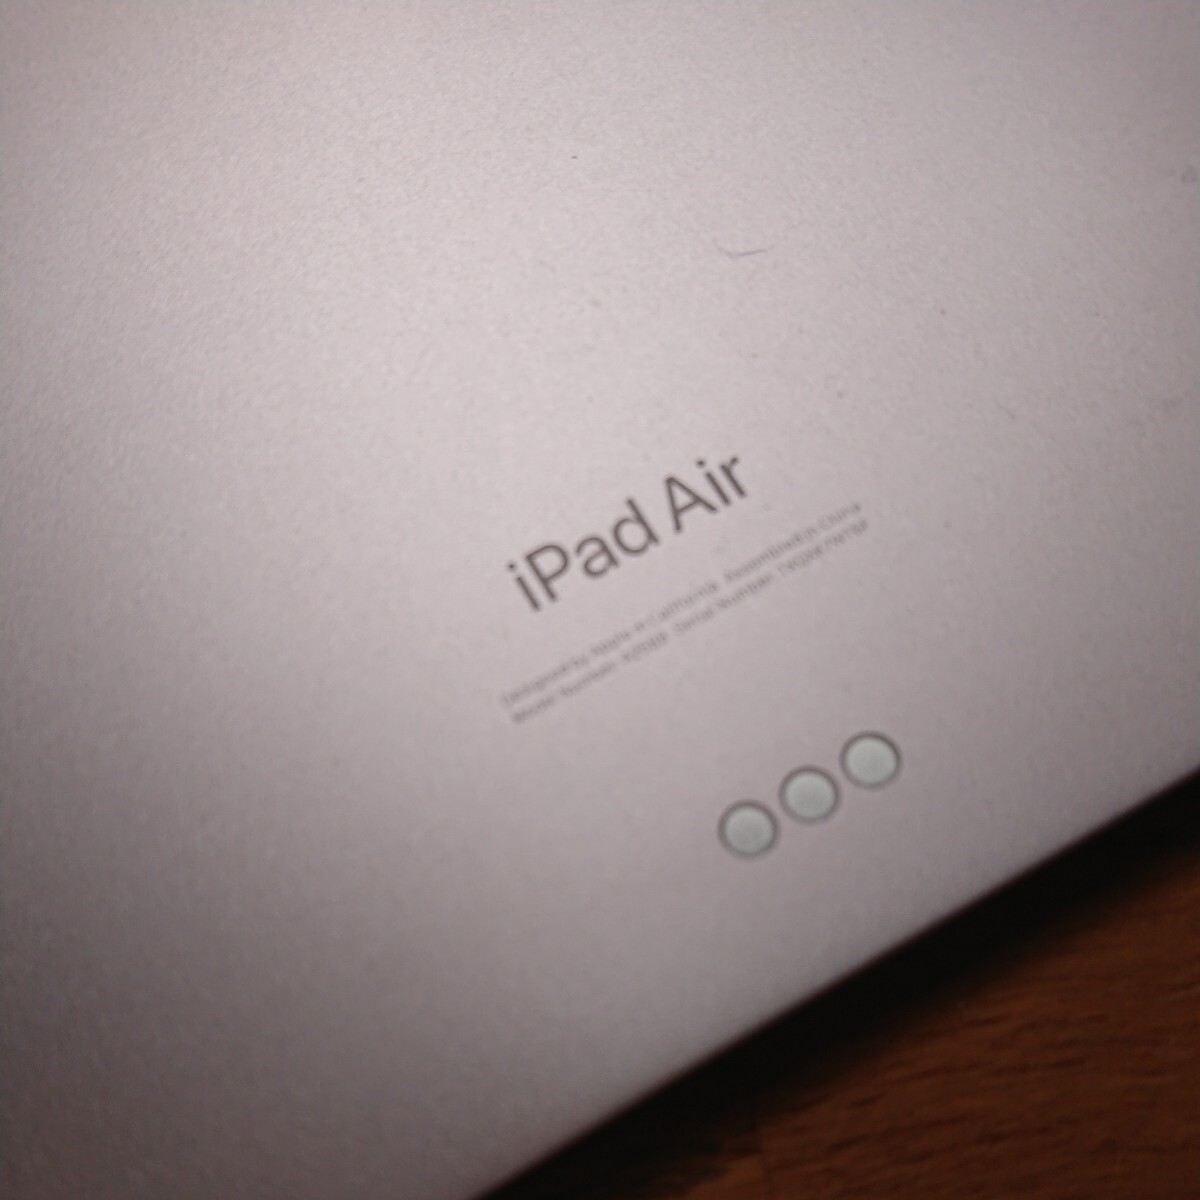  Junk iPad Air 5 поколение wifi 64GB